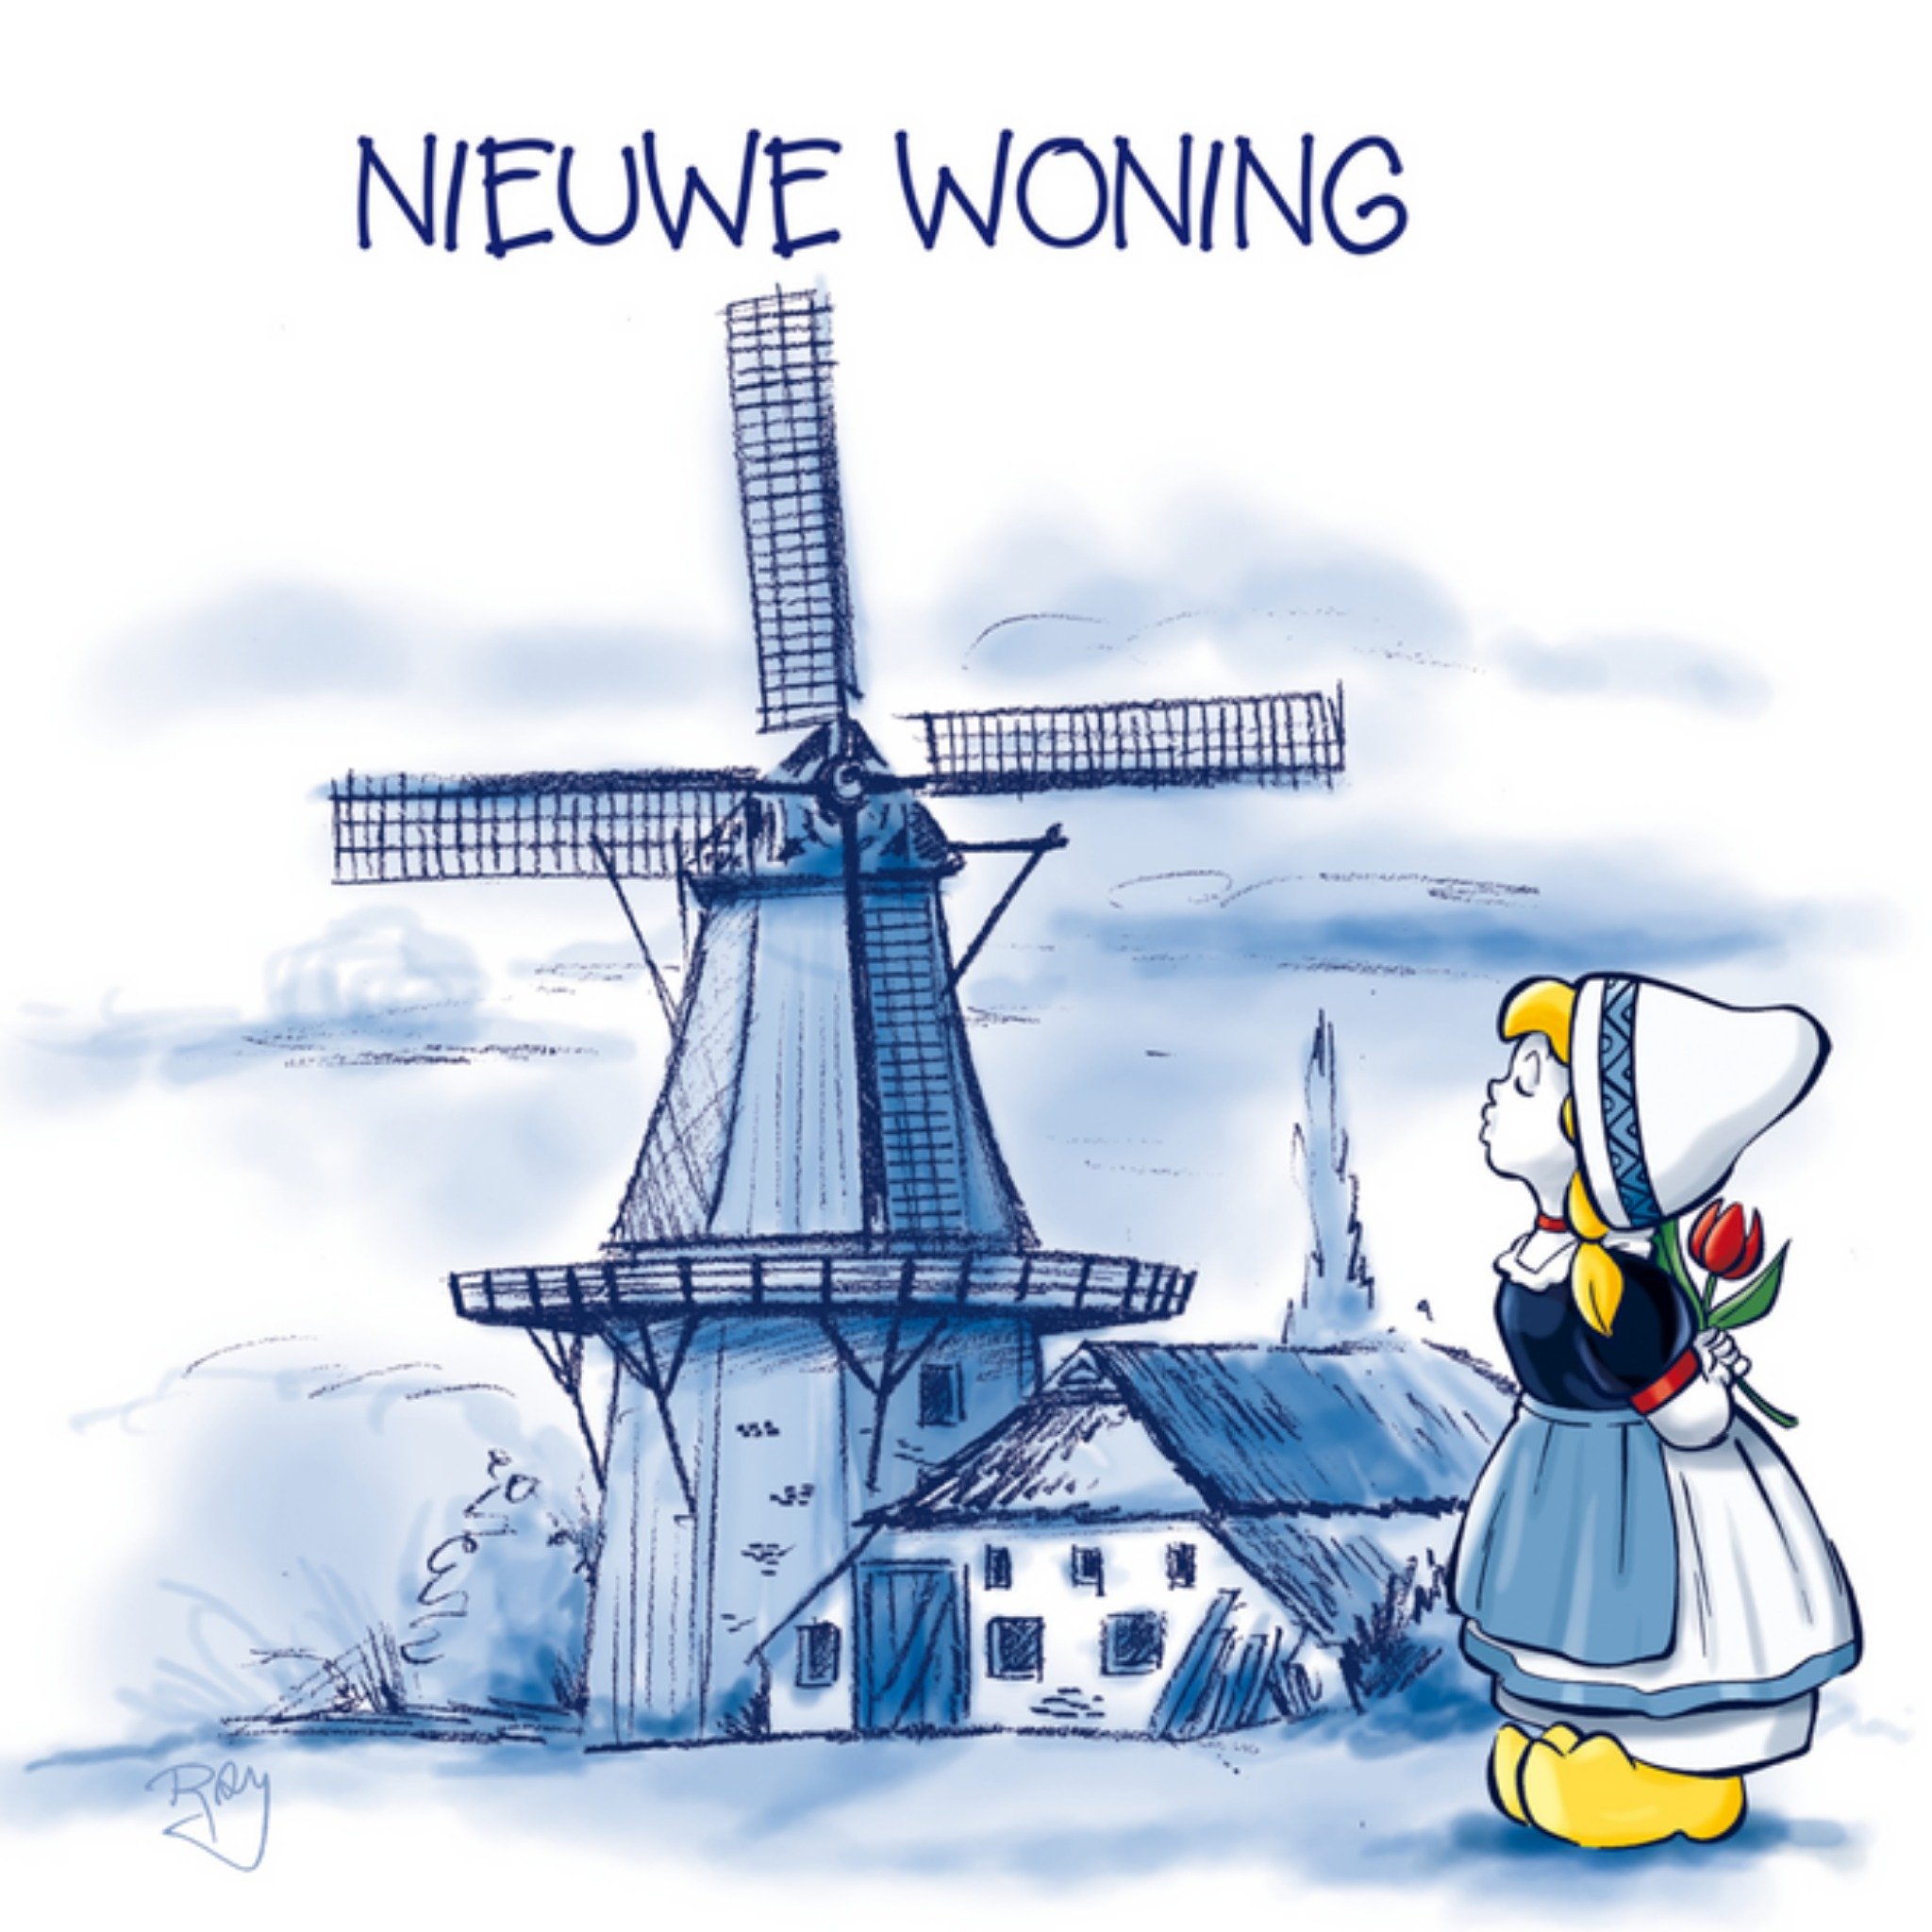 Old Dutch - Nieuwe woning - molen - boerin 23